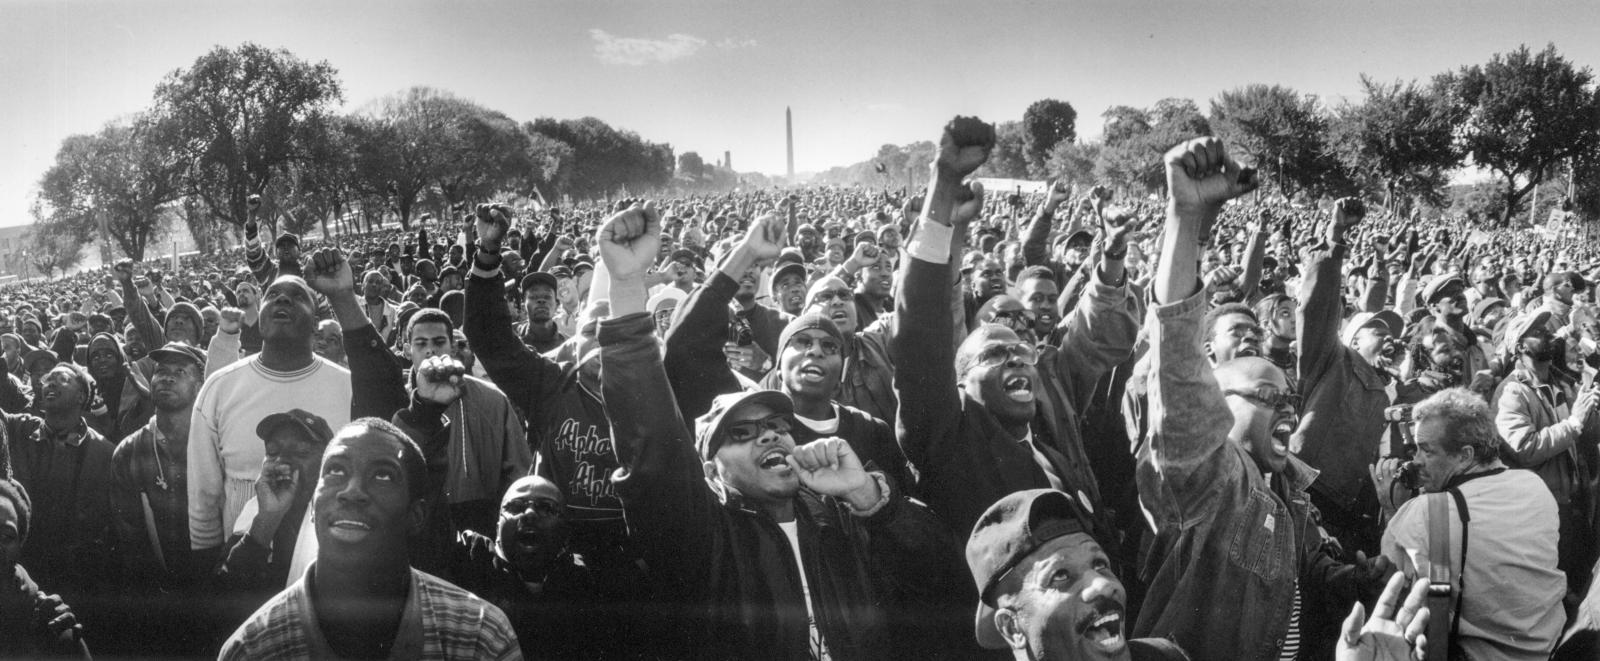 The Million Man March: &ldq...shington, DC., October 17, 1995